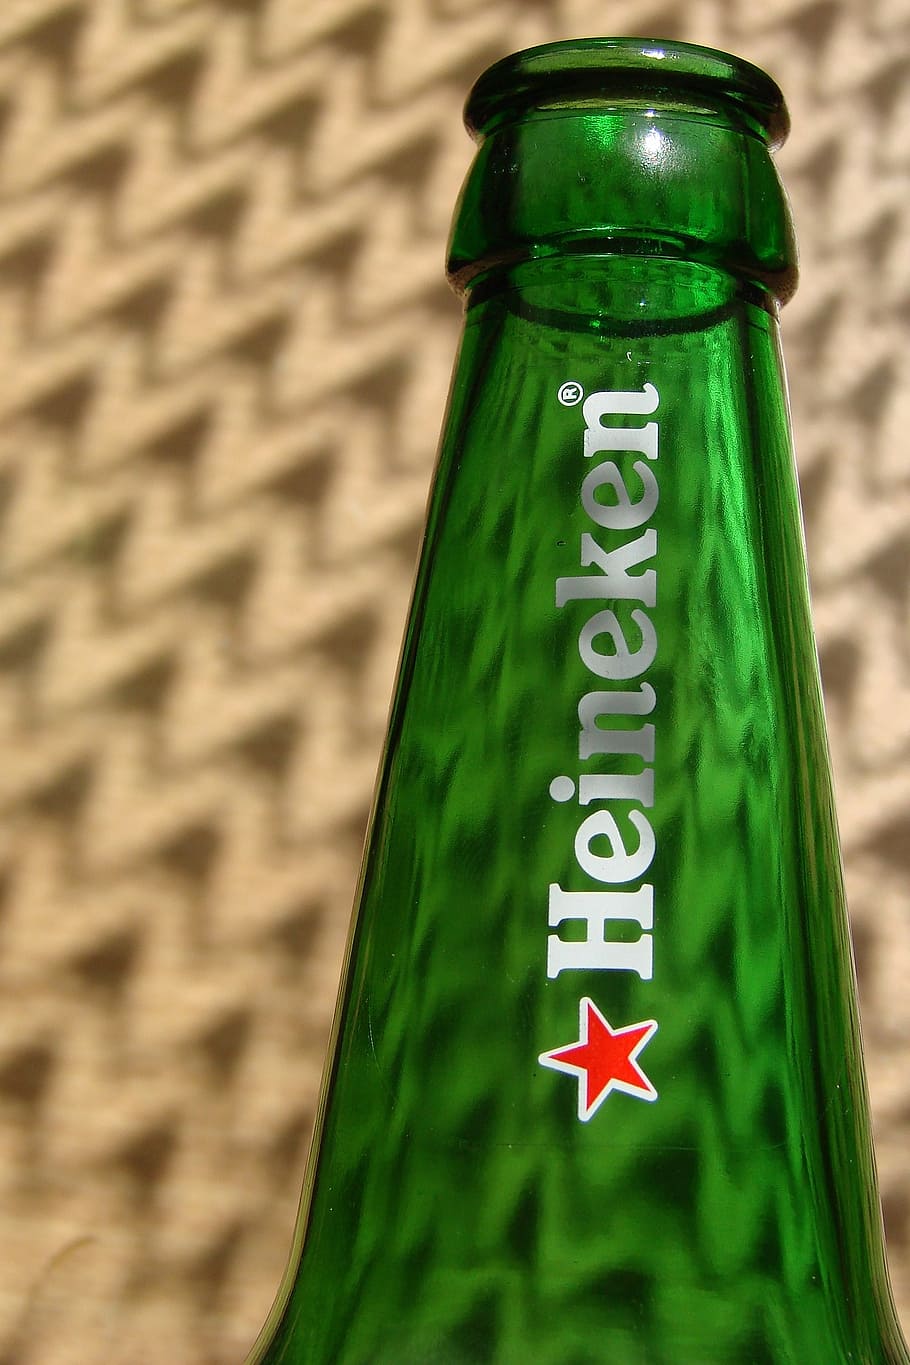 heineken, beer, bottle, logo, green, rays, shadows, green color